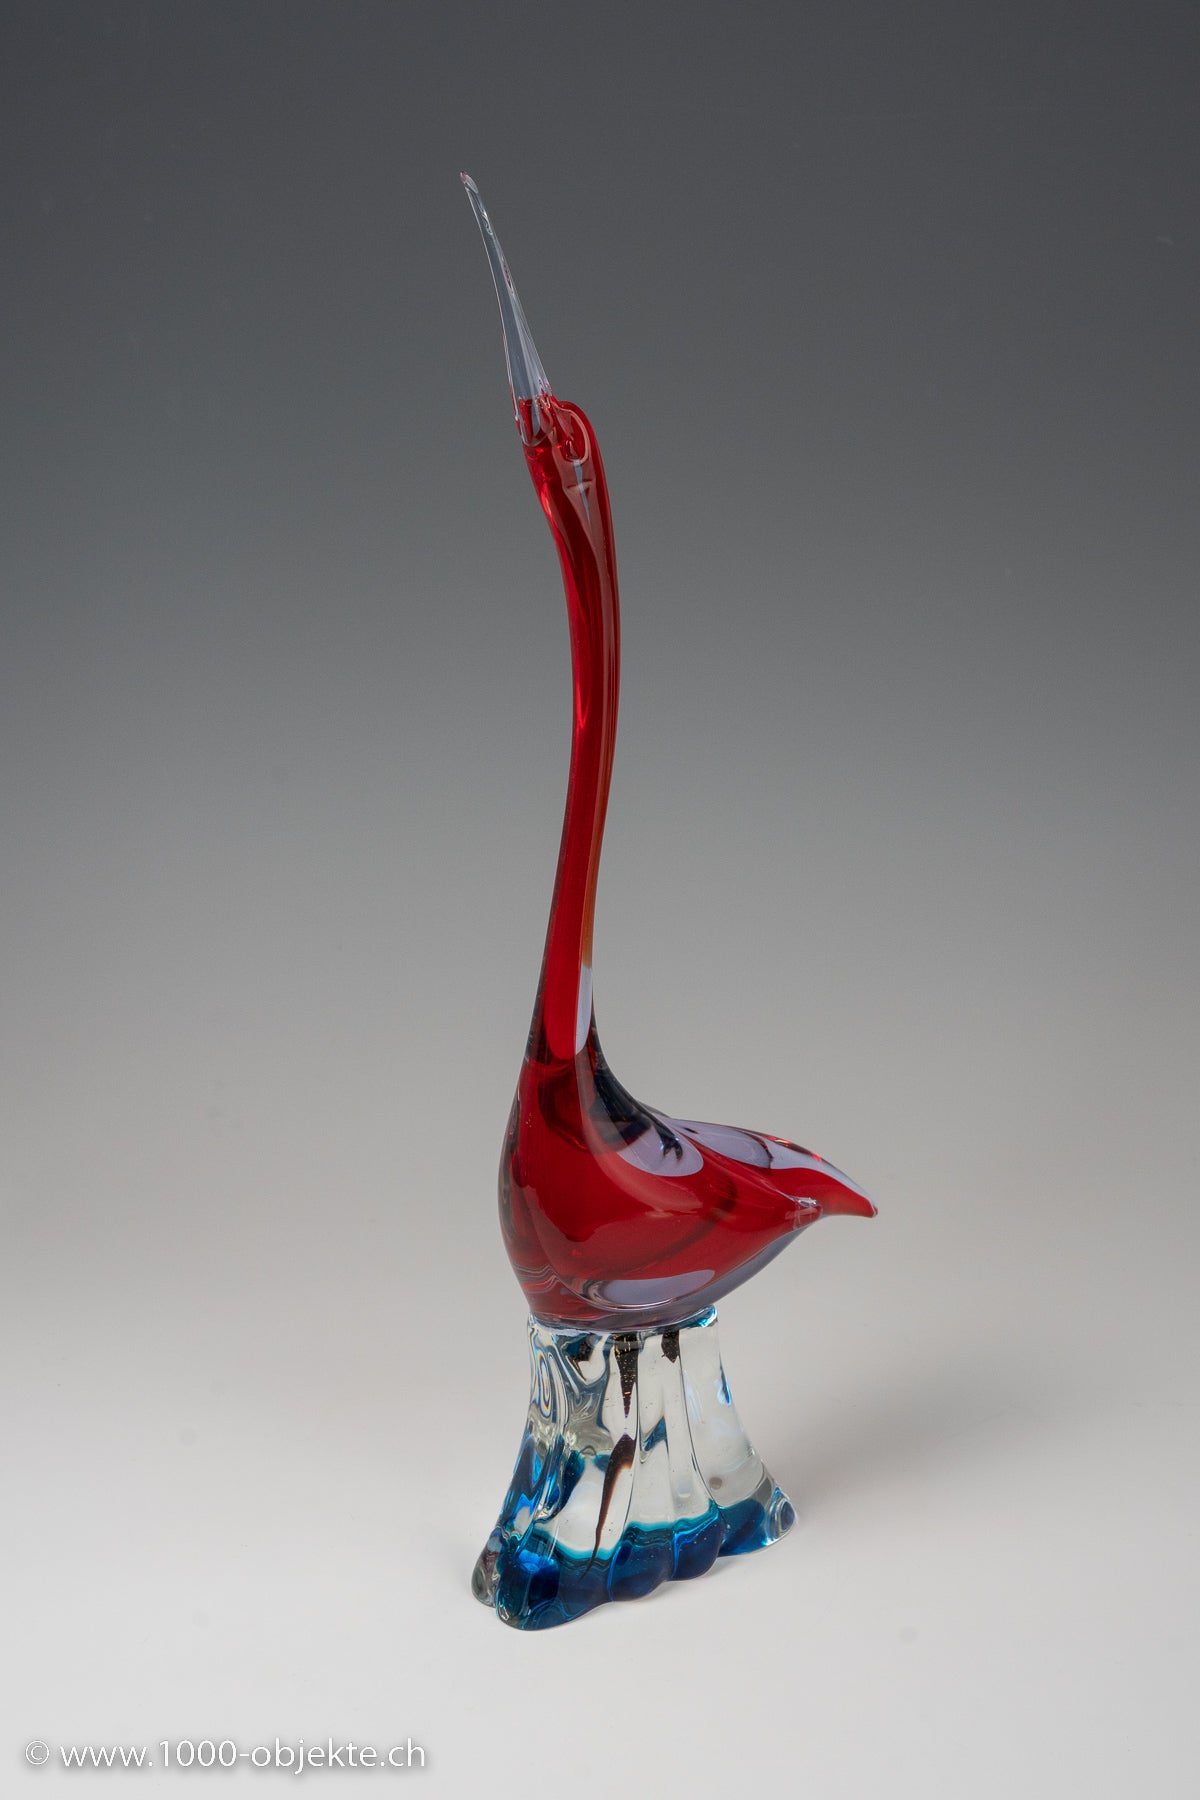 Cenedese Antonio Da Ros.  Museum collection. Red flamingo in water